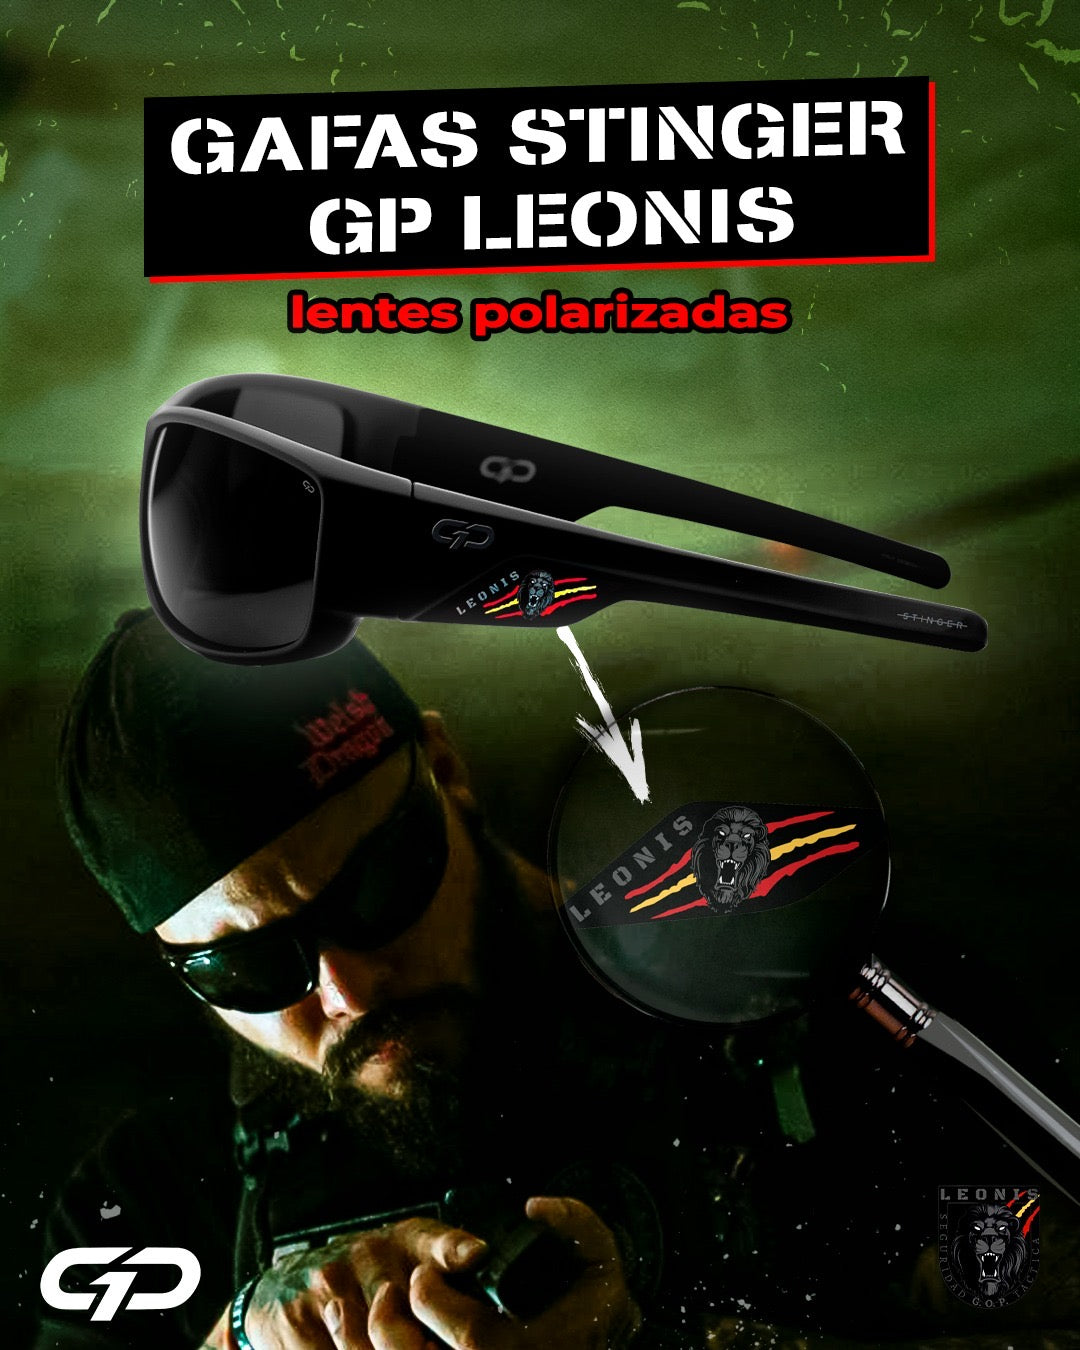 Stinger GP Black - Leonis Edition